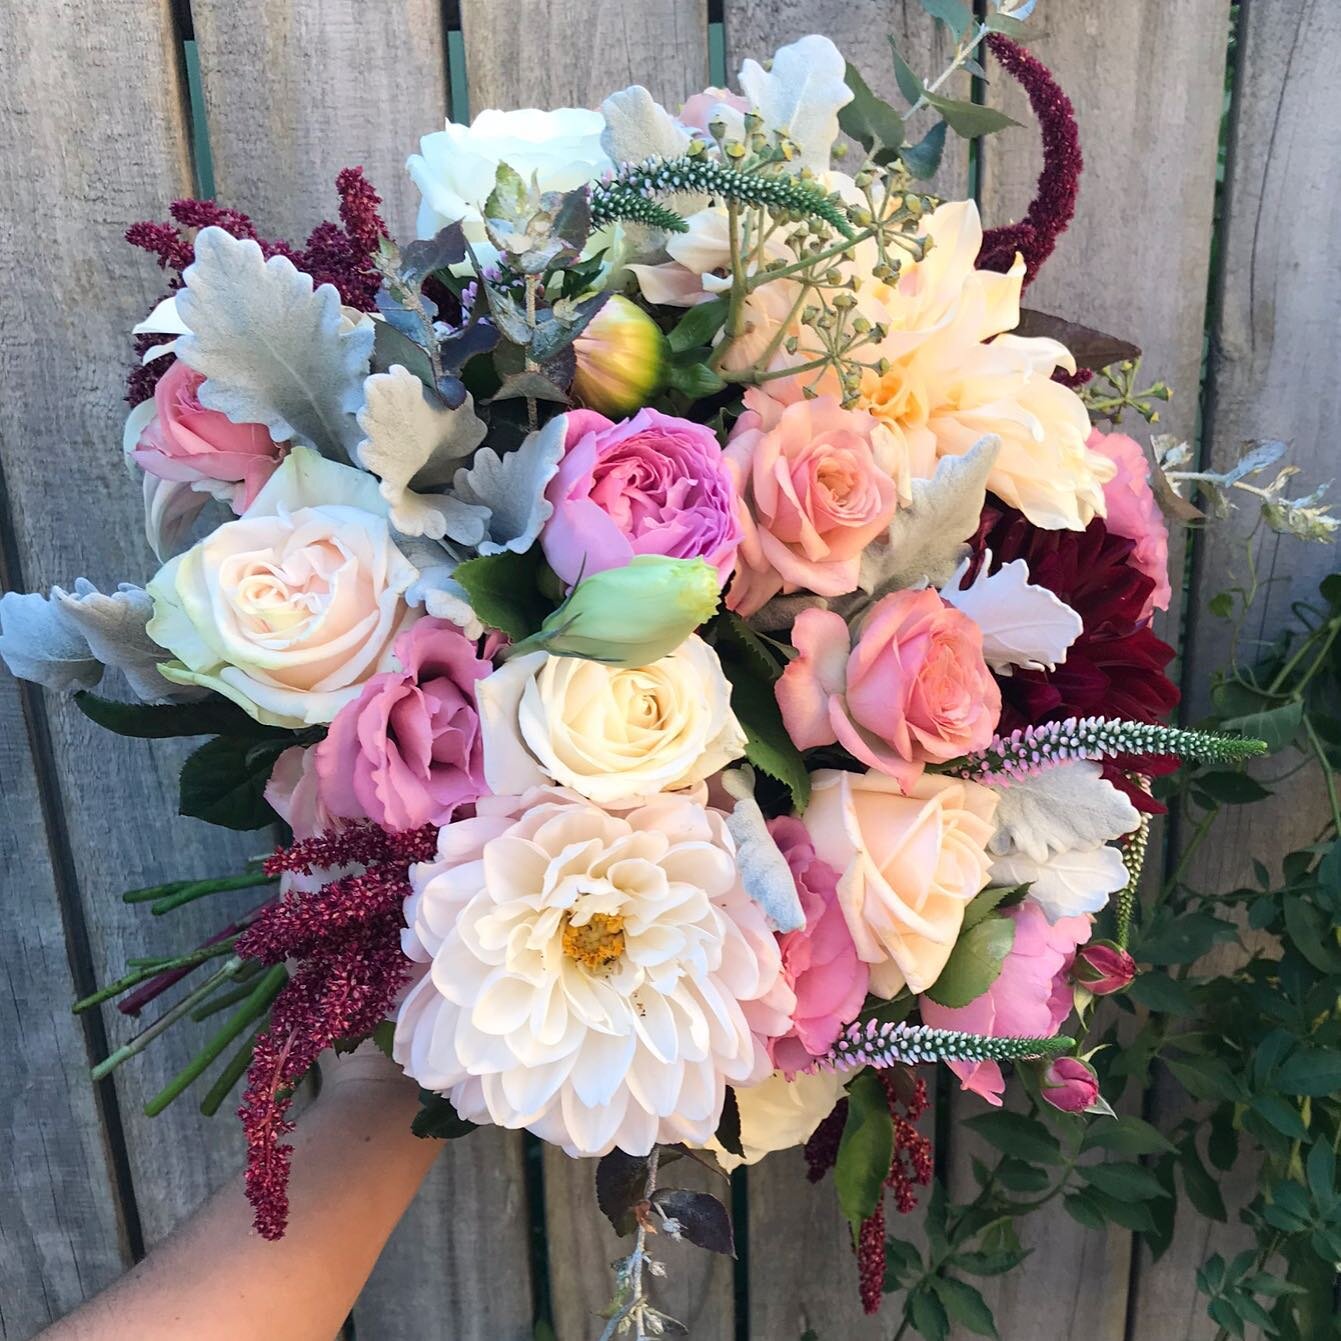 The perfect mix of colour 😍
.
.
#pastelbouquet #prettybouquet 
#sydneyweddings #floristsweddingday #sydneyflorist #sydneyweddingflowers #weddingday #floralstyling #floralstylingsydney 
#weddingstyle #bouquet #bridesflowers #floweraddict #weddinginsp